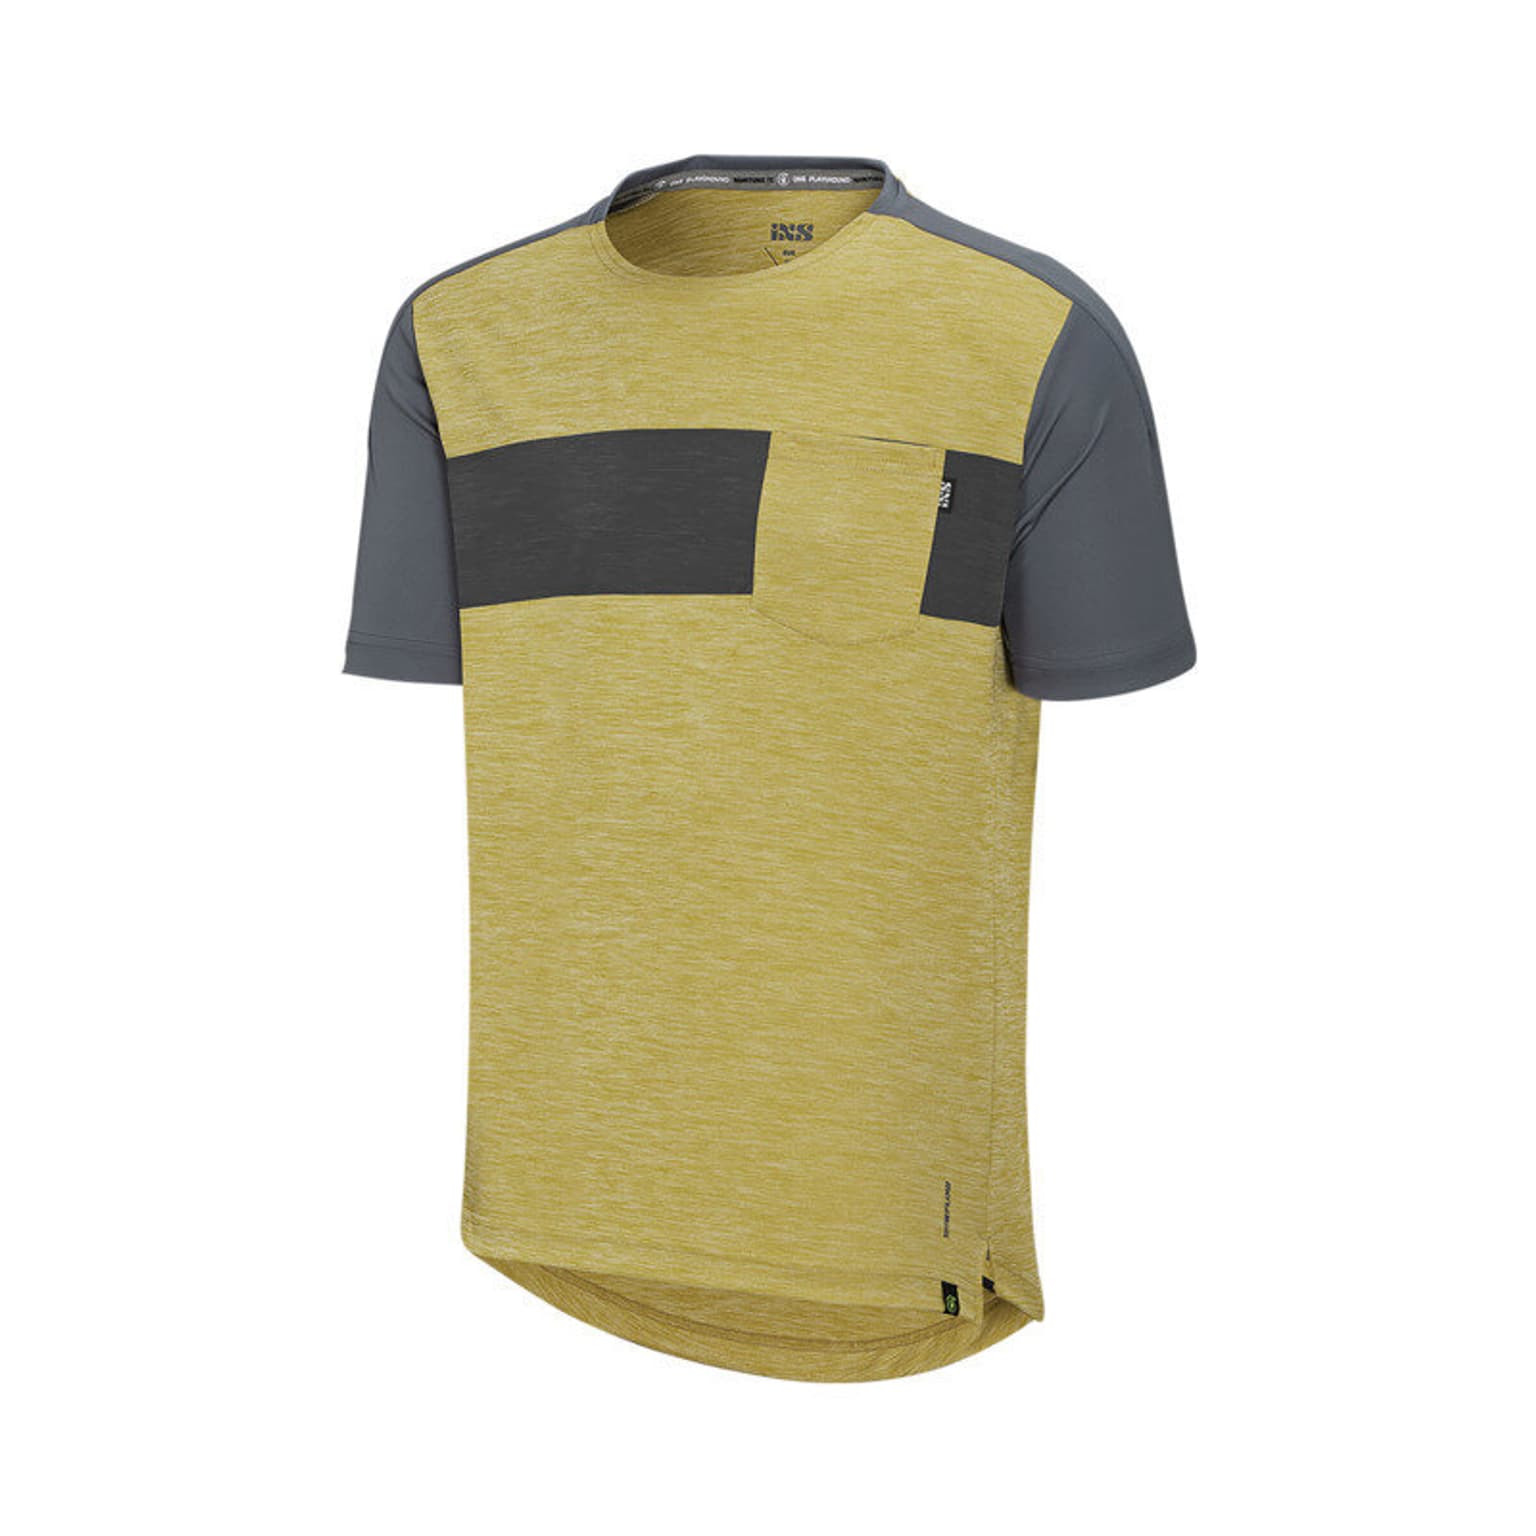 iXS iXS Flow X T-shirt giallo-scuro 1